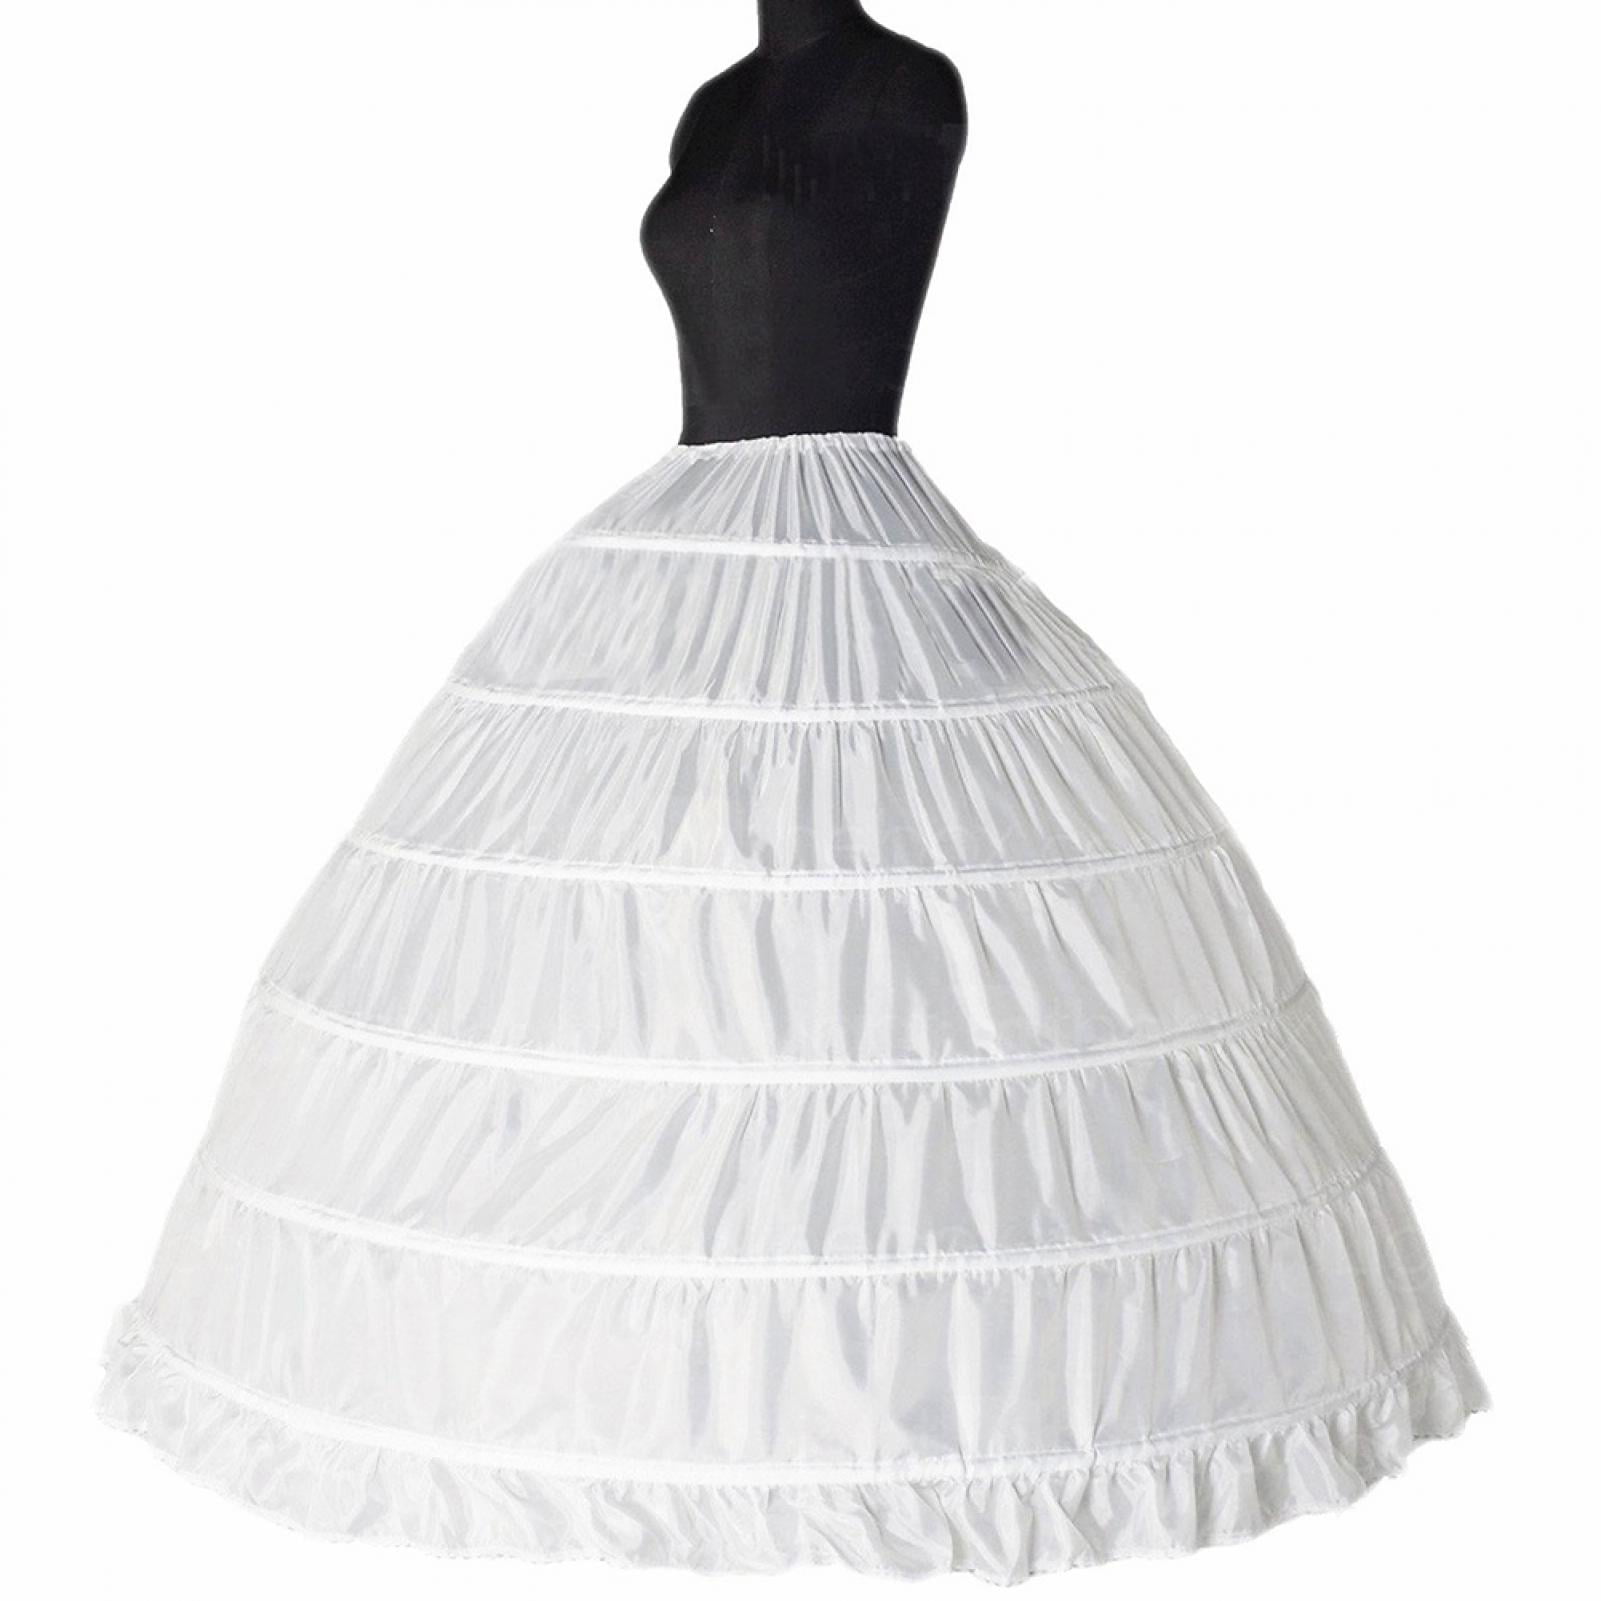 Zaqw 6-hoop Hoops Petticoat White Bridal Crinoline Petticoats 